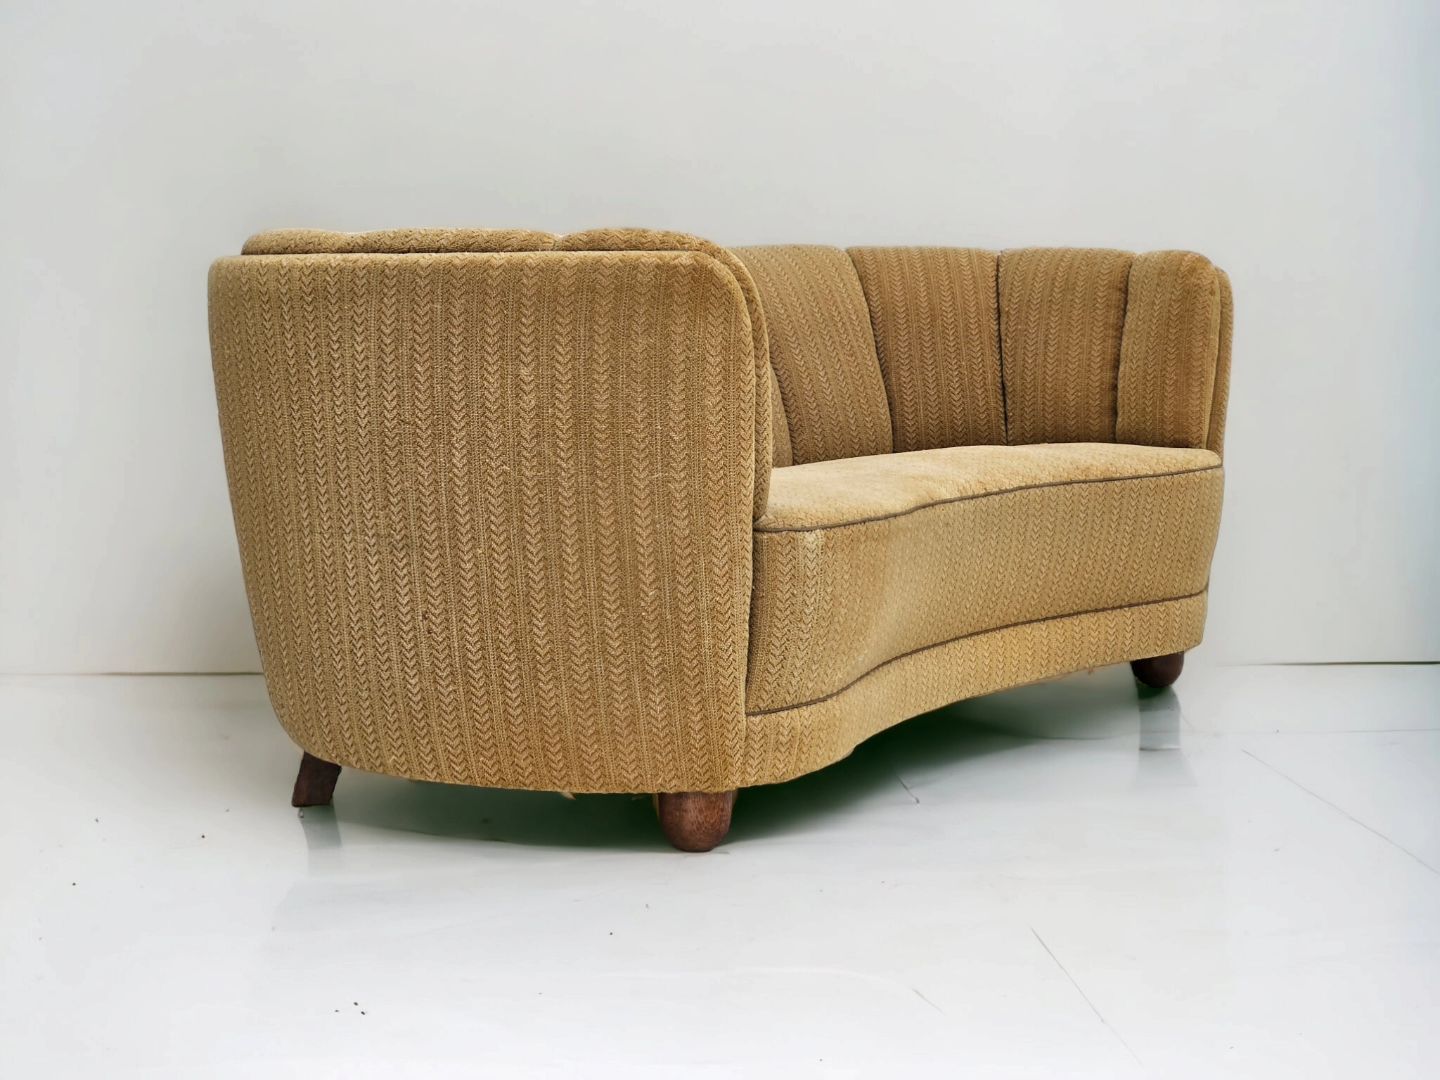 1960s, Danish vintage 3 seater "Banana" sofa, original condition.